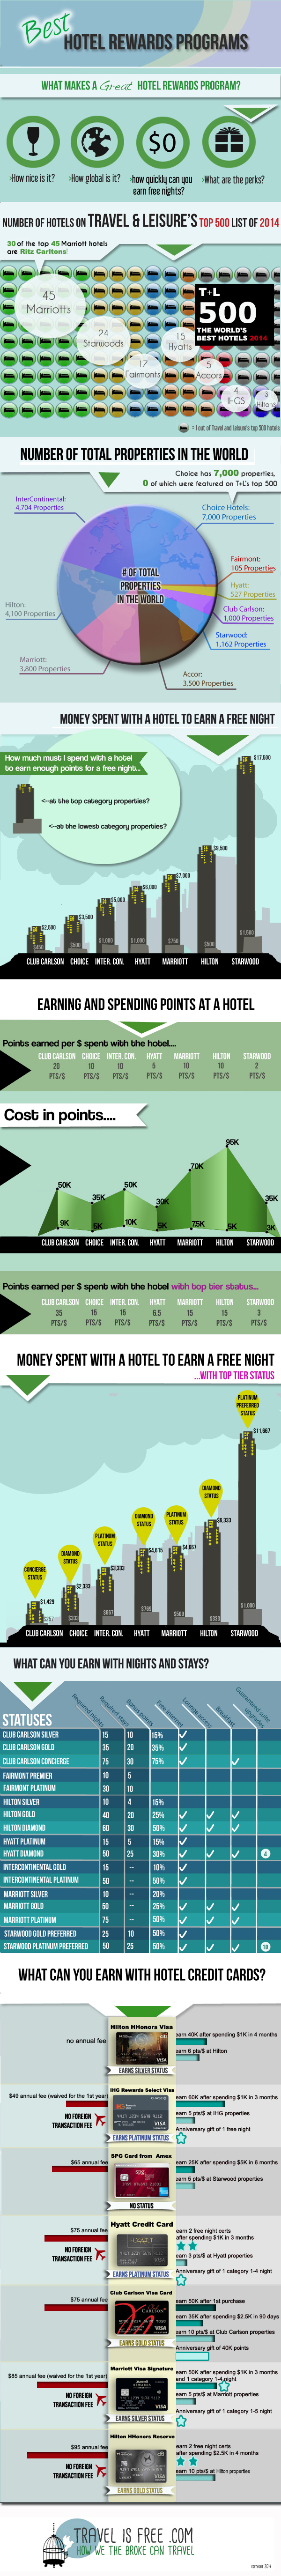 Best Hotel Rewards Programs